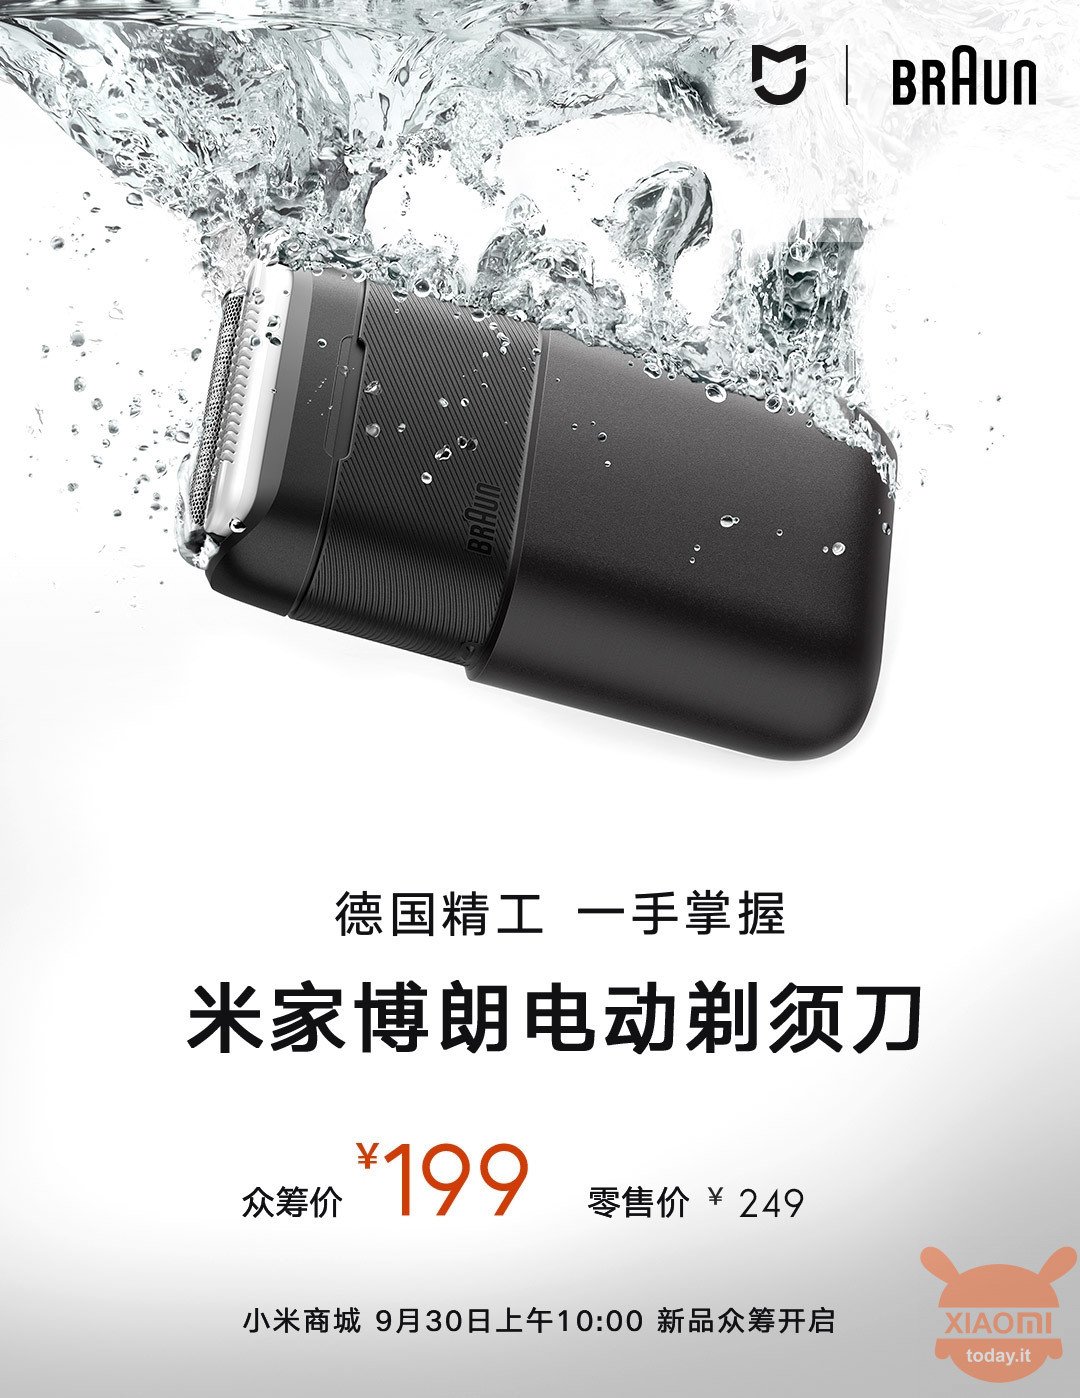 Xiaomi Mijia Braun Electric Shaver